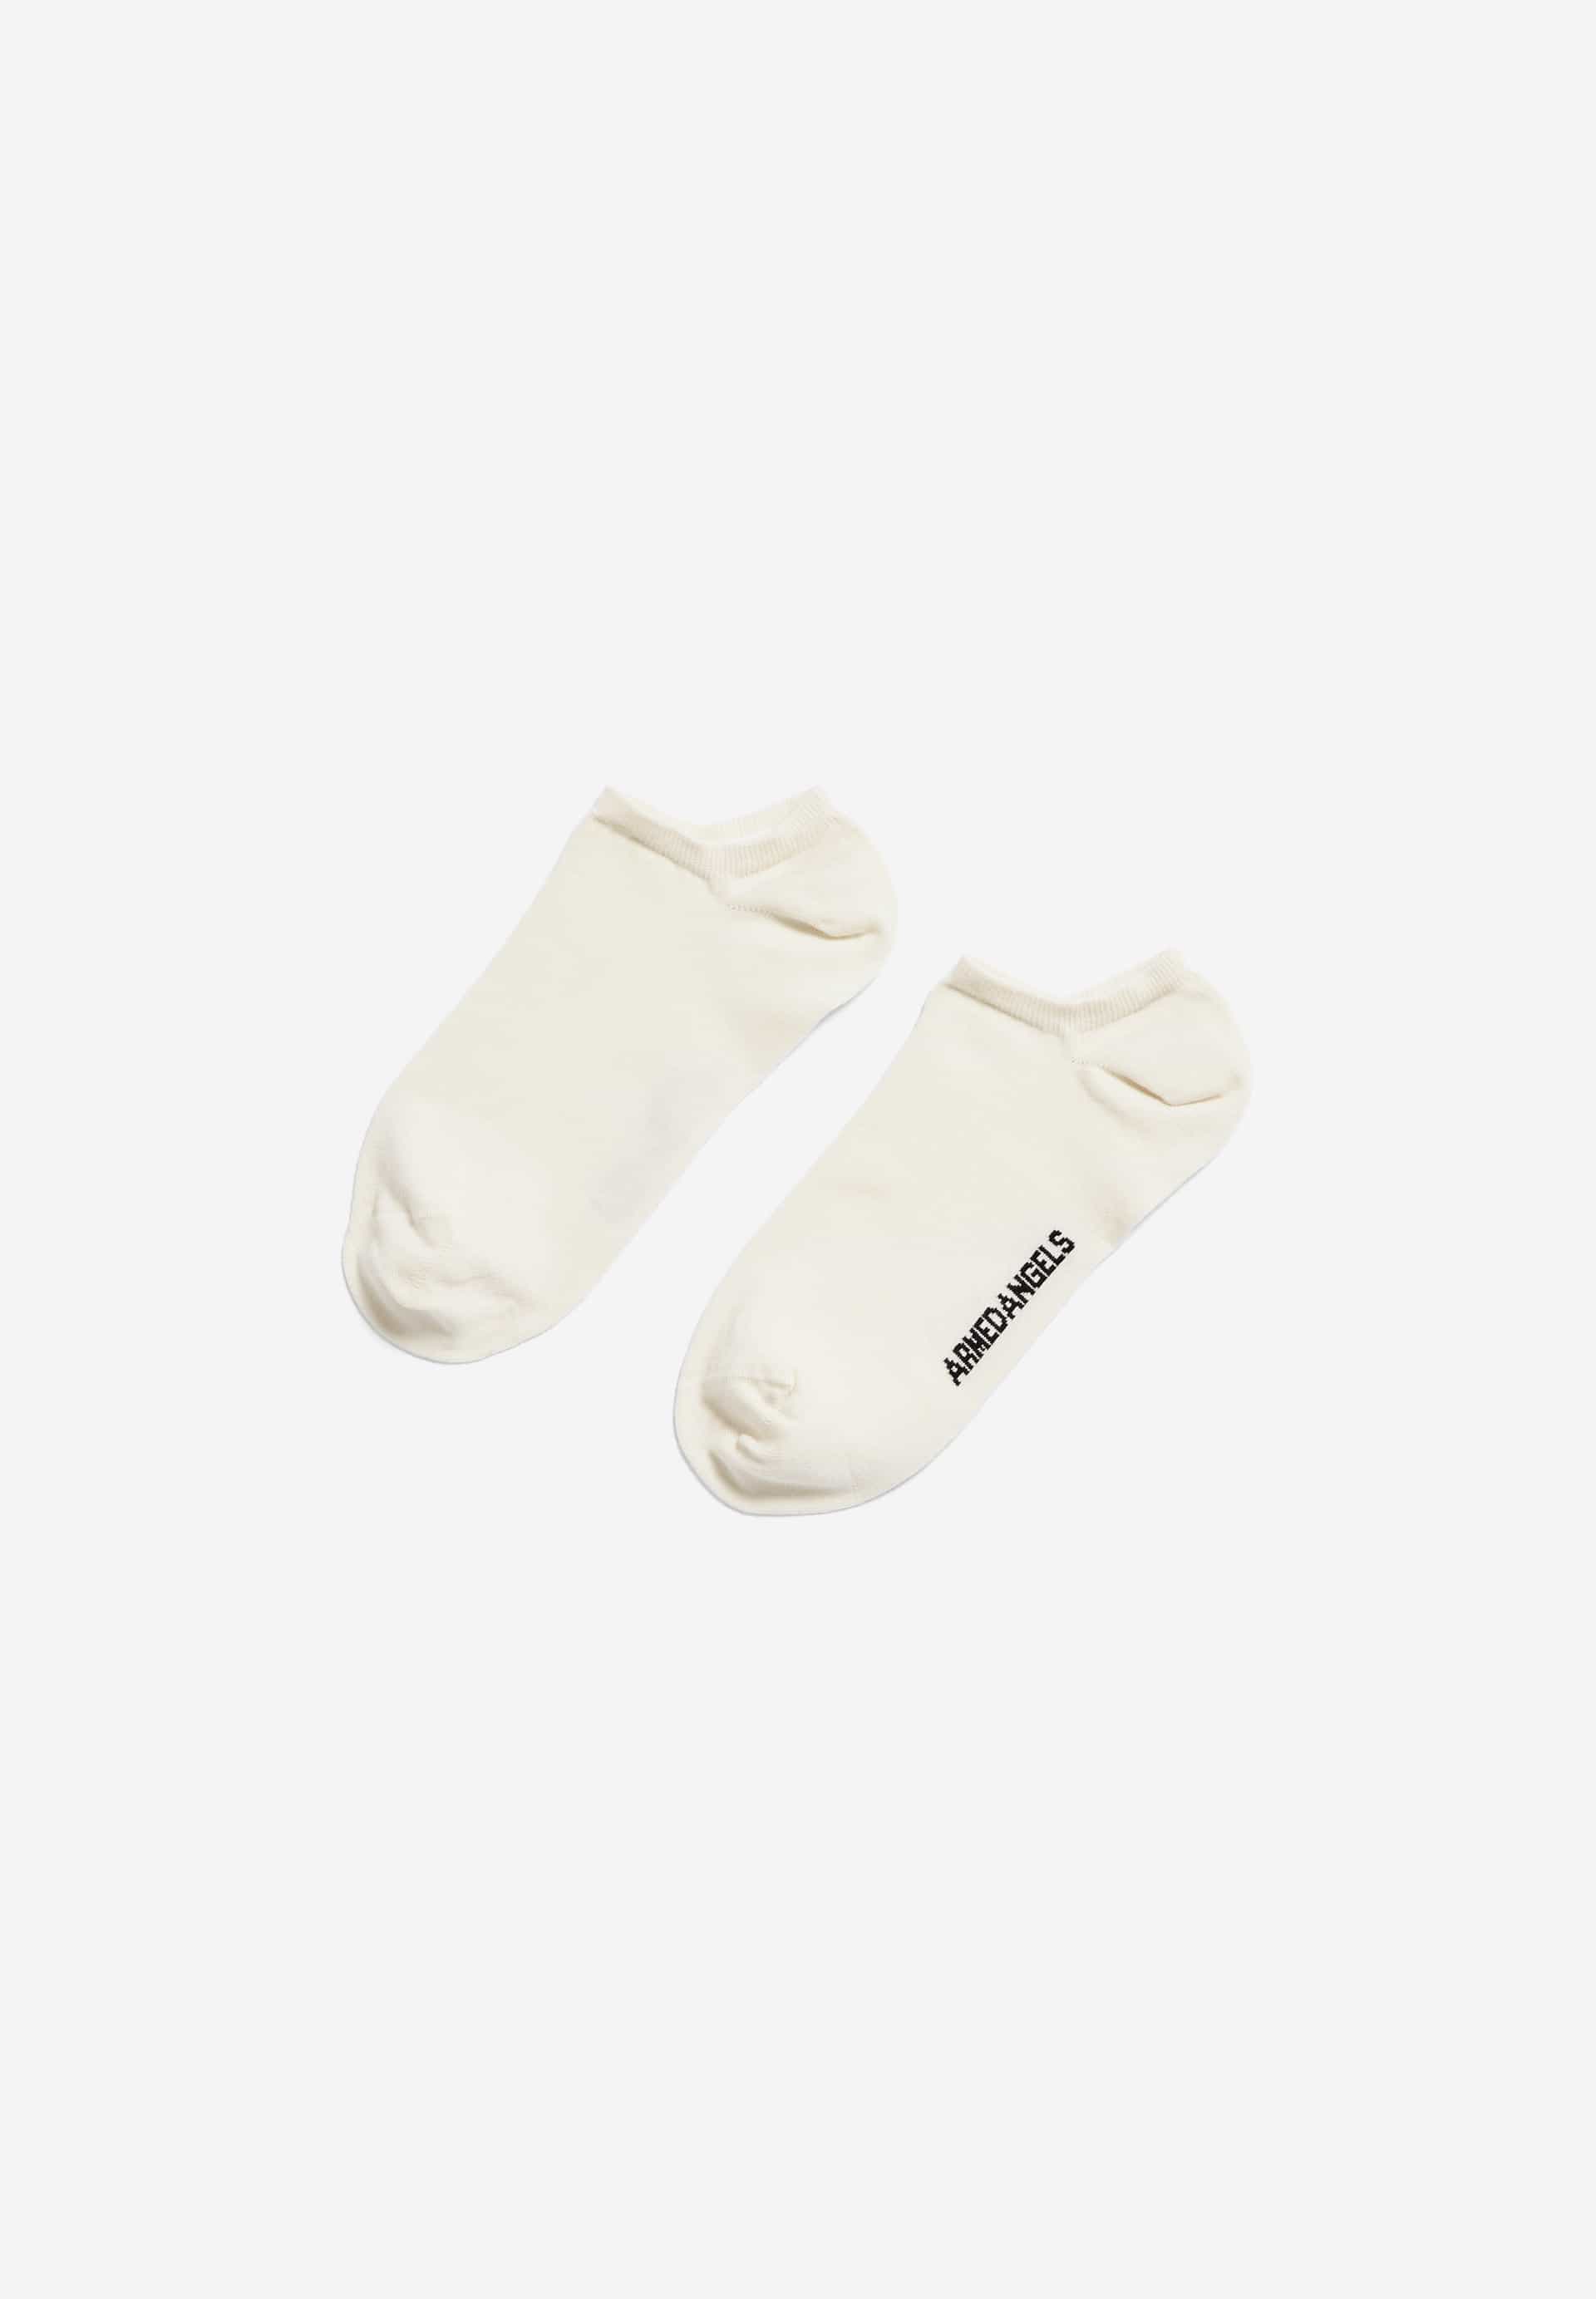 SAALVO Socks made of Organic Cotton Mix